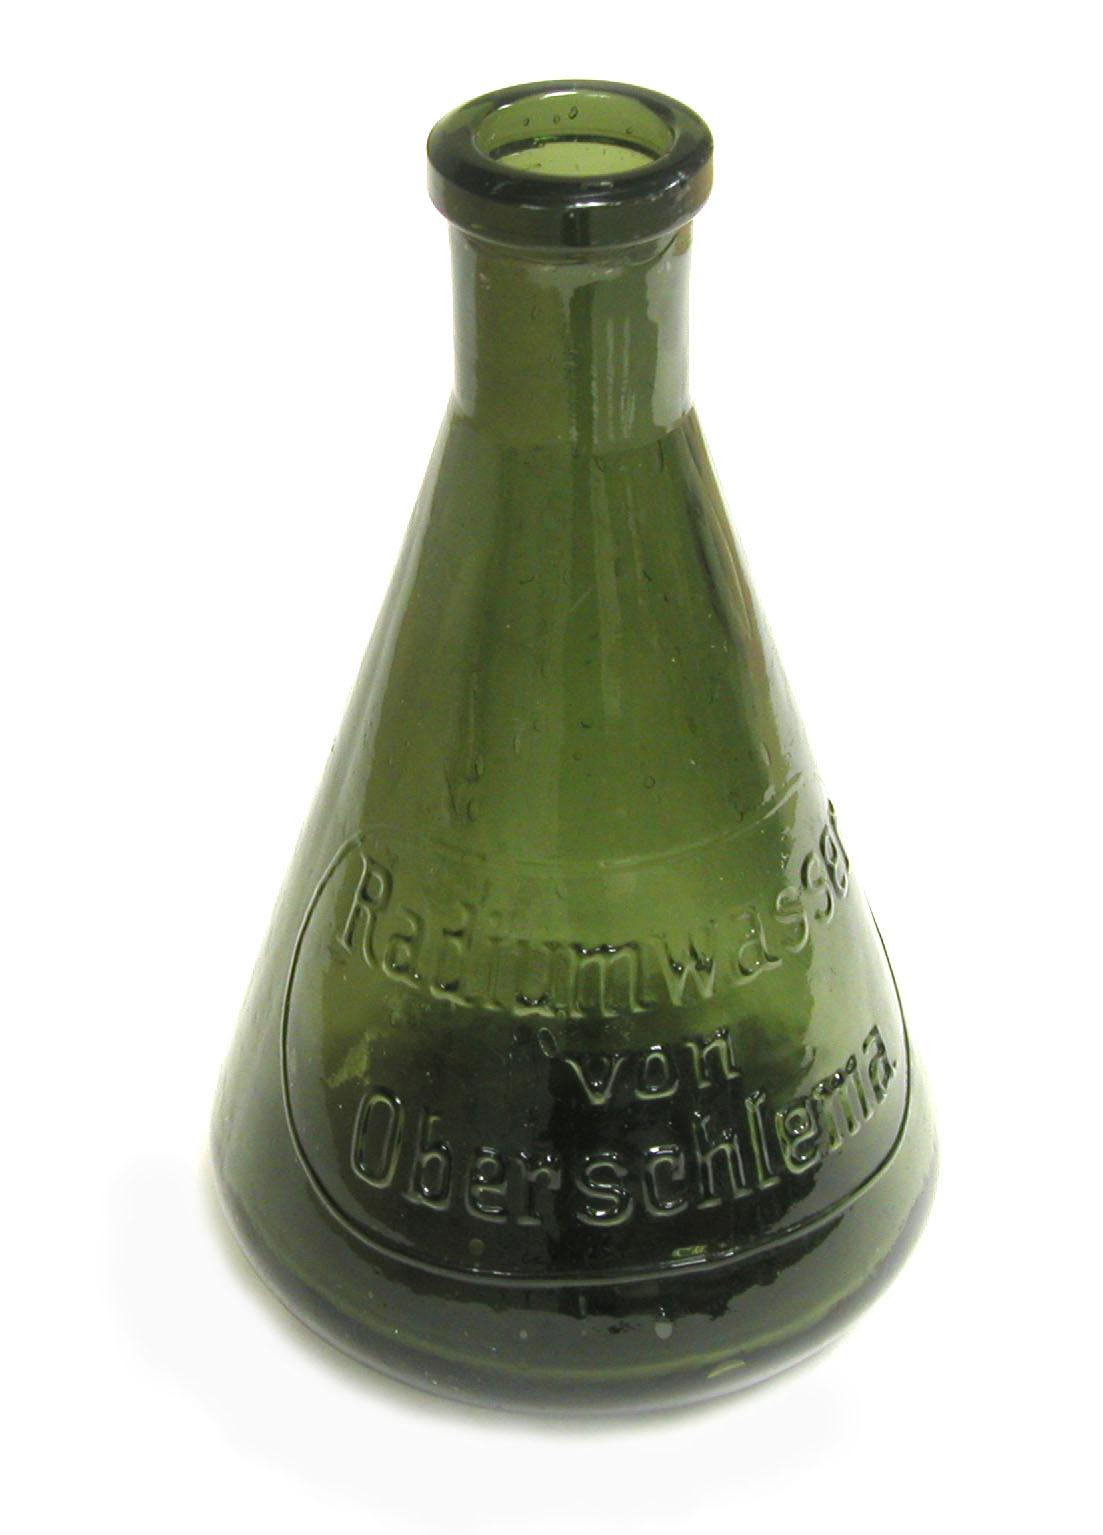 Radiumwasser Flask (ca. 1920s or 1930s)